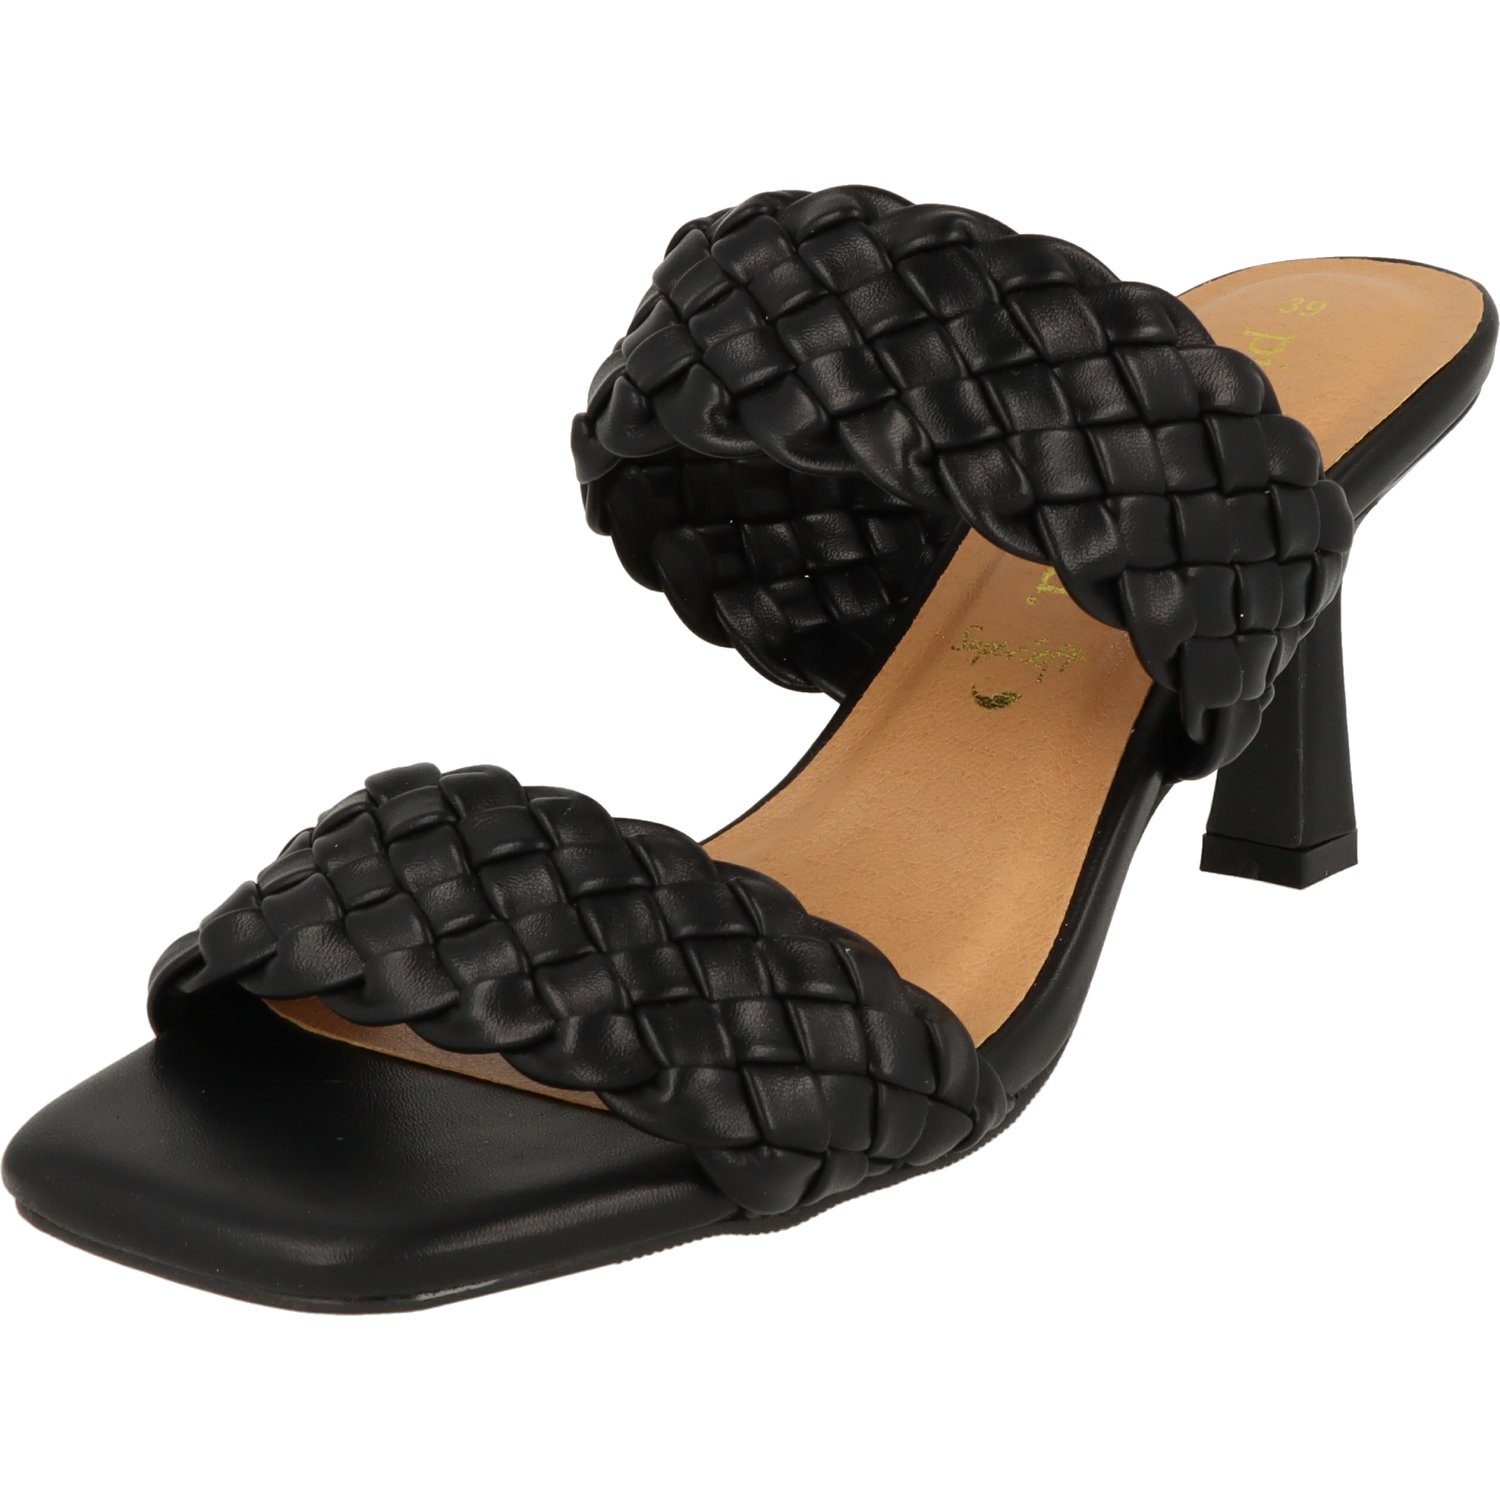 piece of mind. Damen Schuhe elegante Absatzsandale 273-161 Slipper High-Heel-Sandalette Black